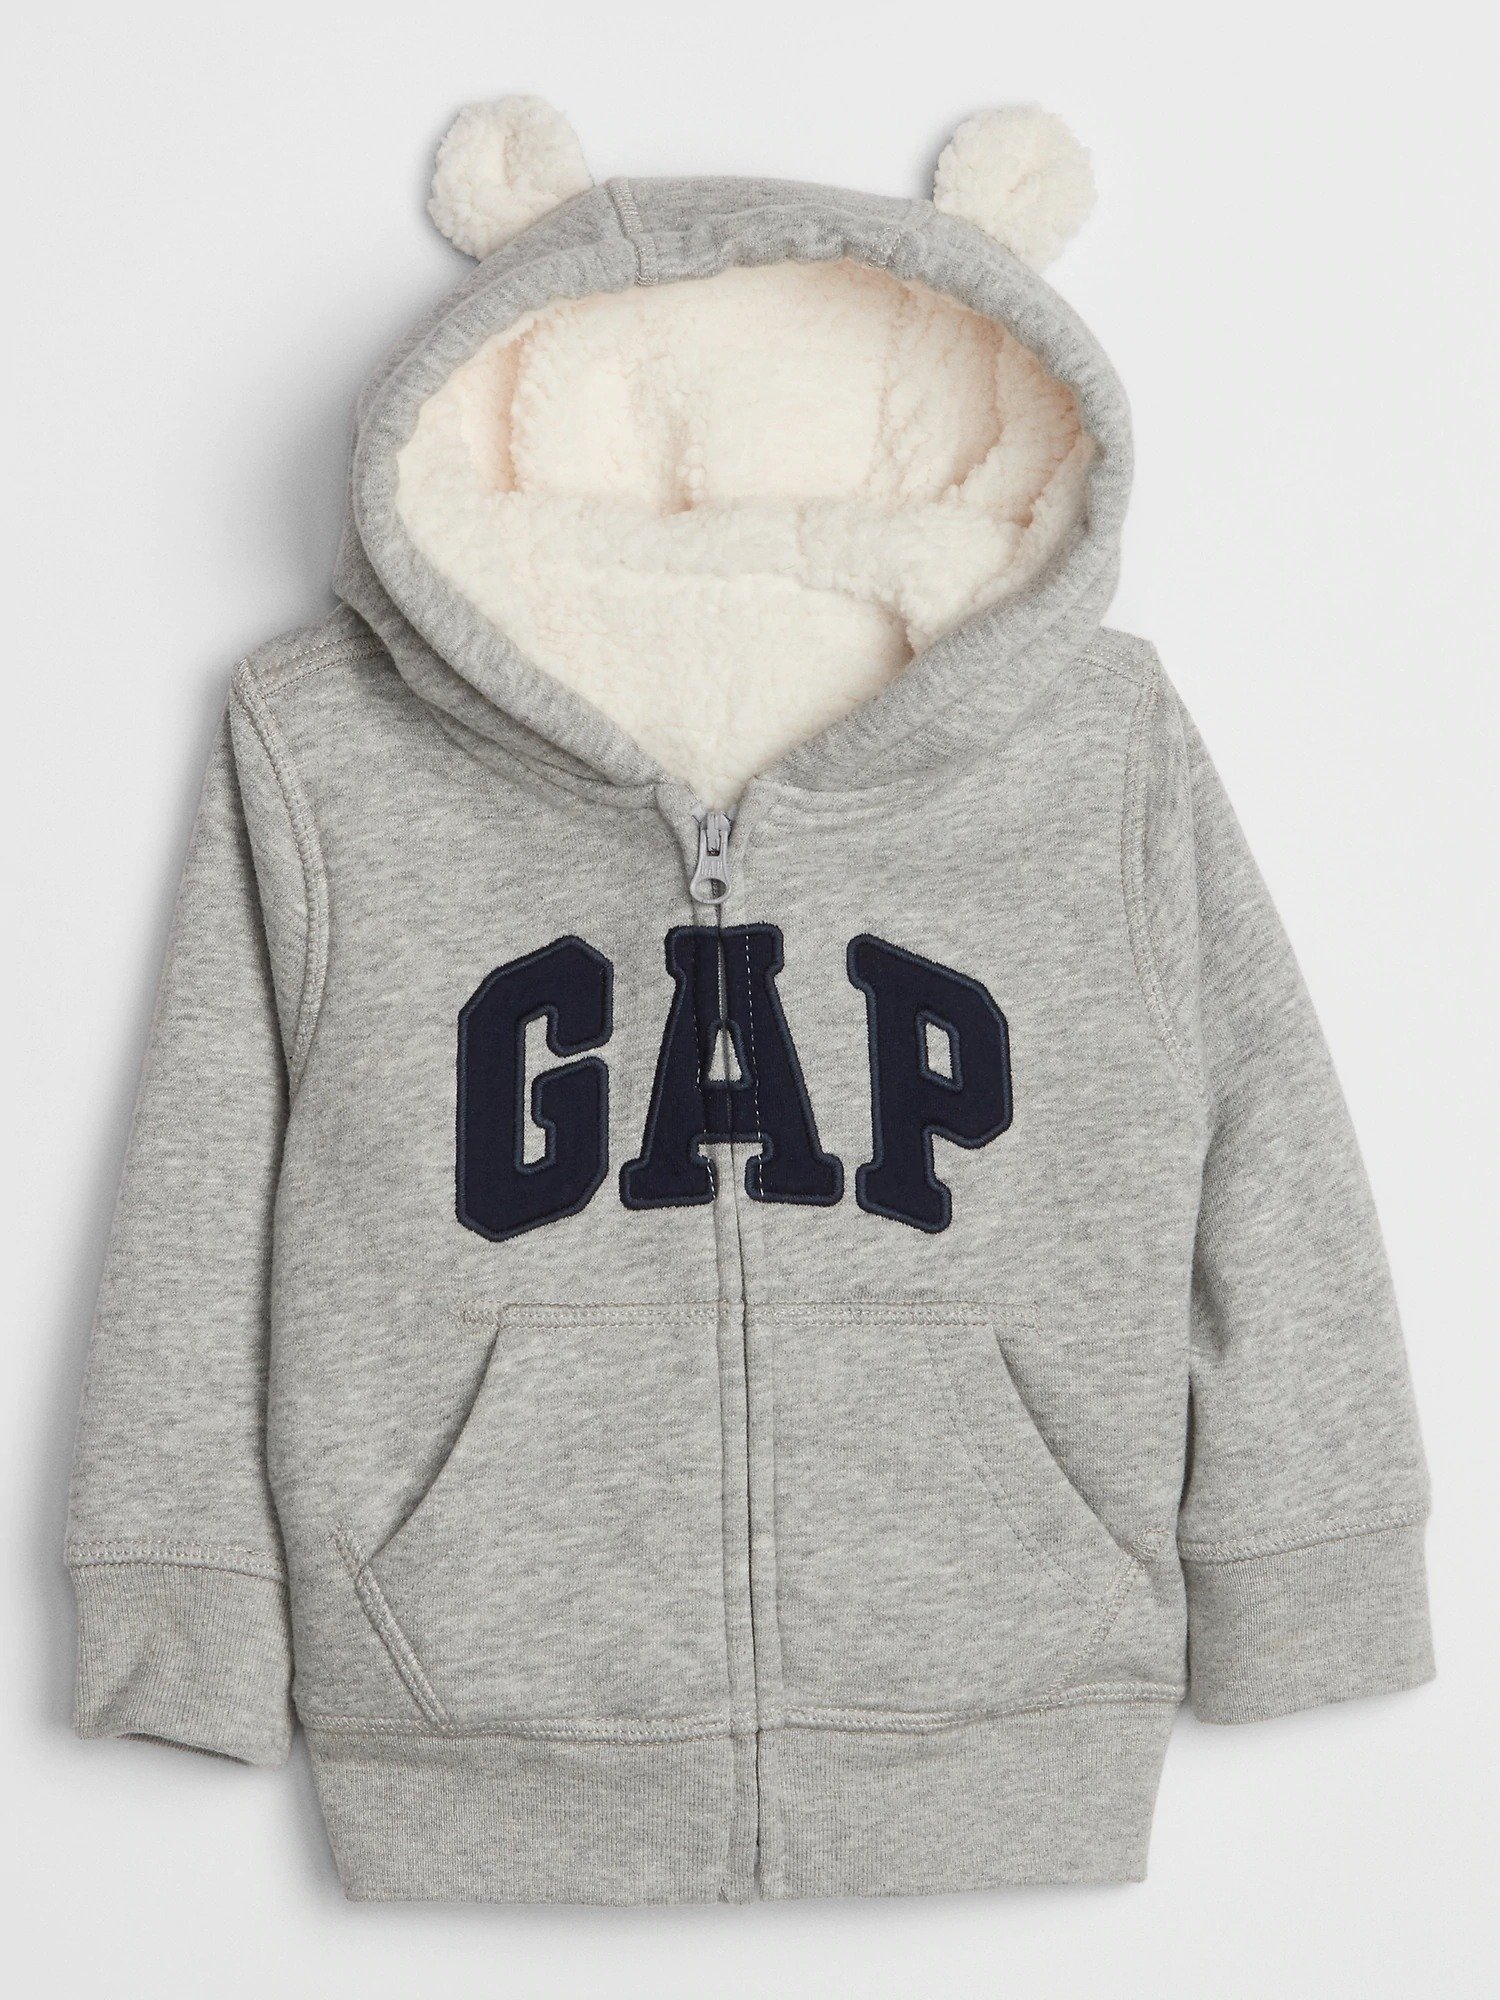 Gap Sherpa Sweatshirt product image